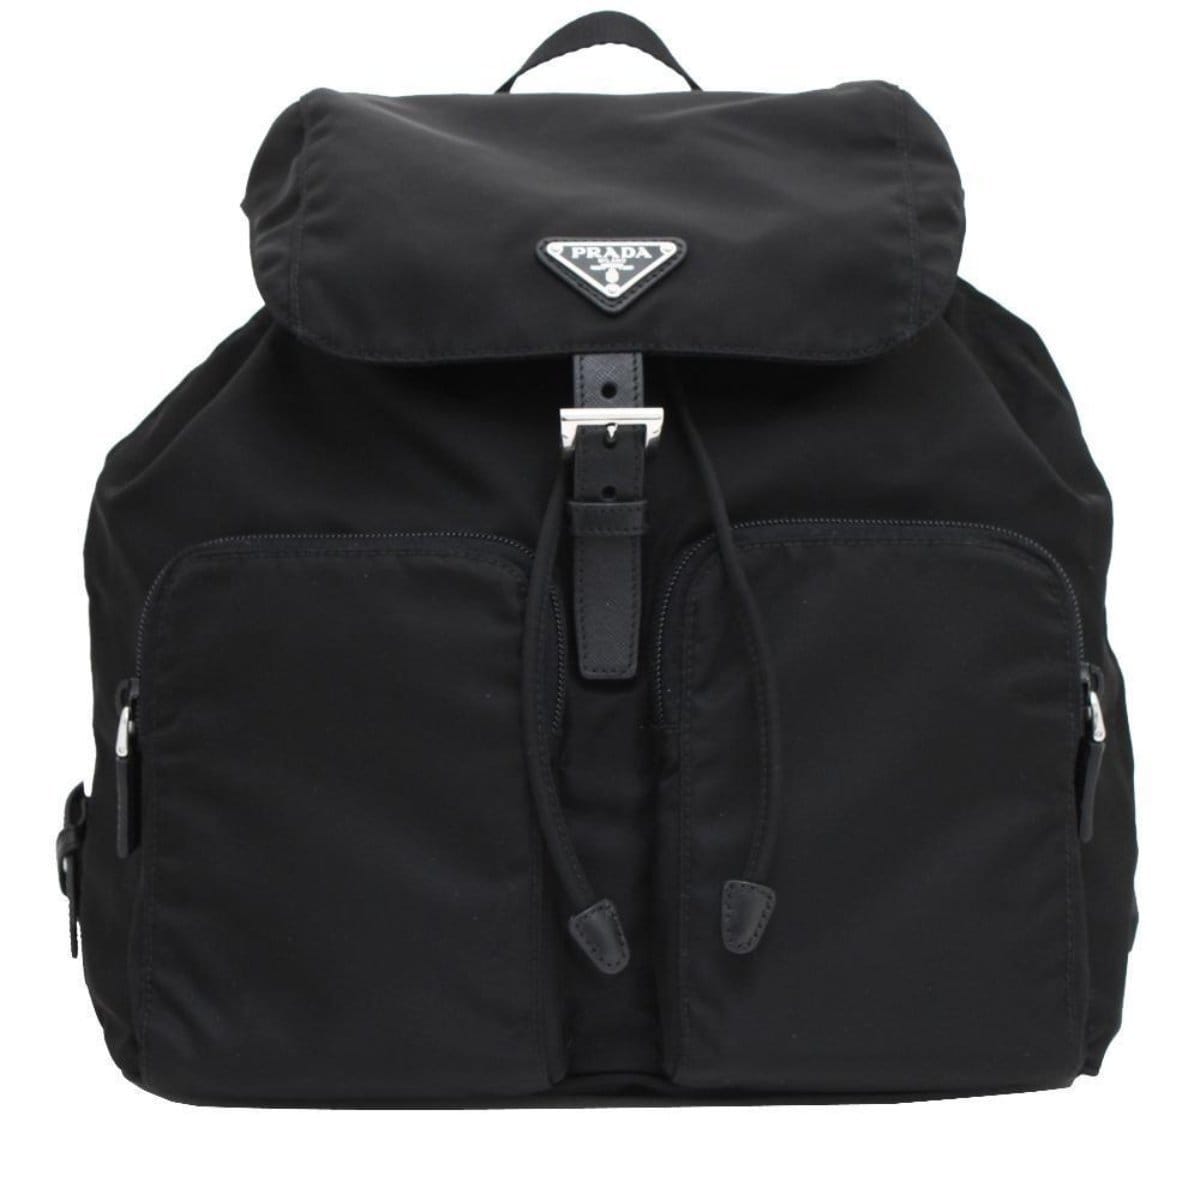 prada fabric backpack